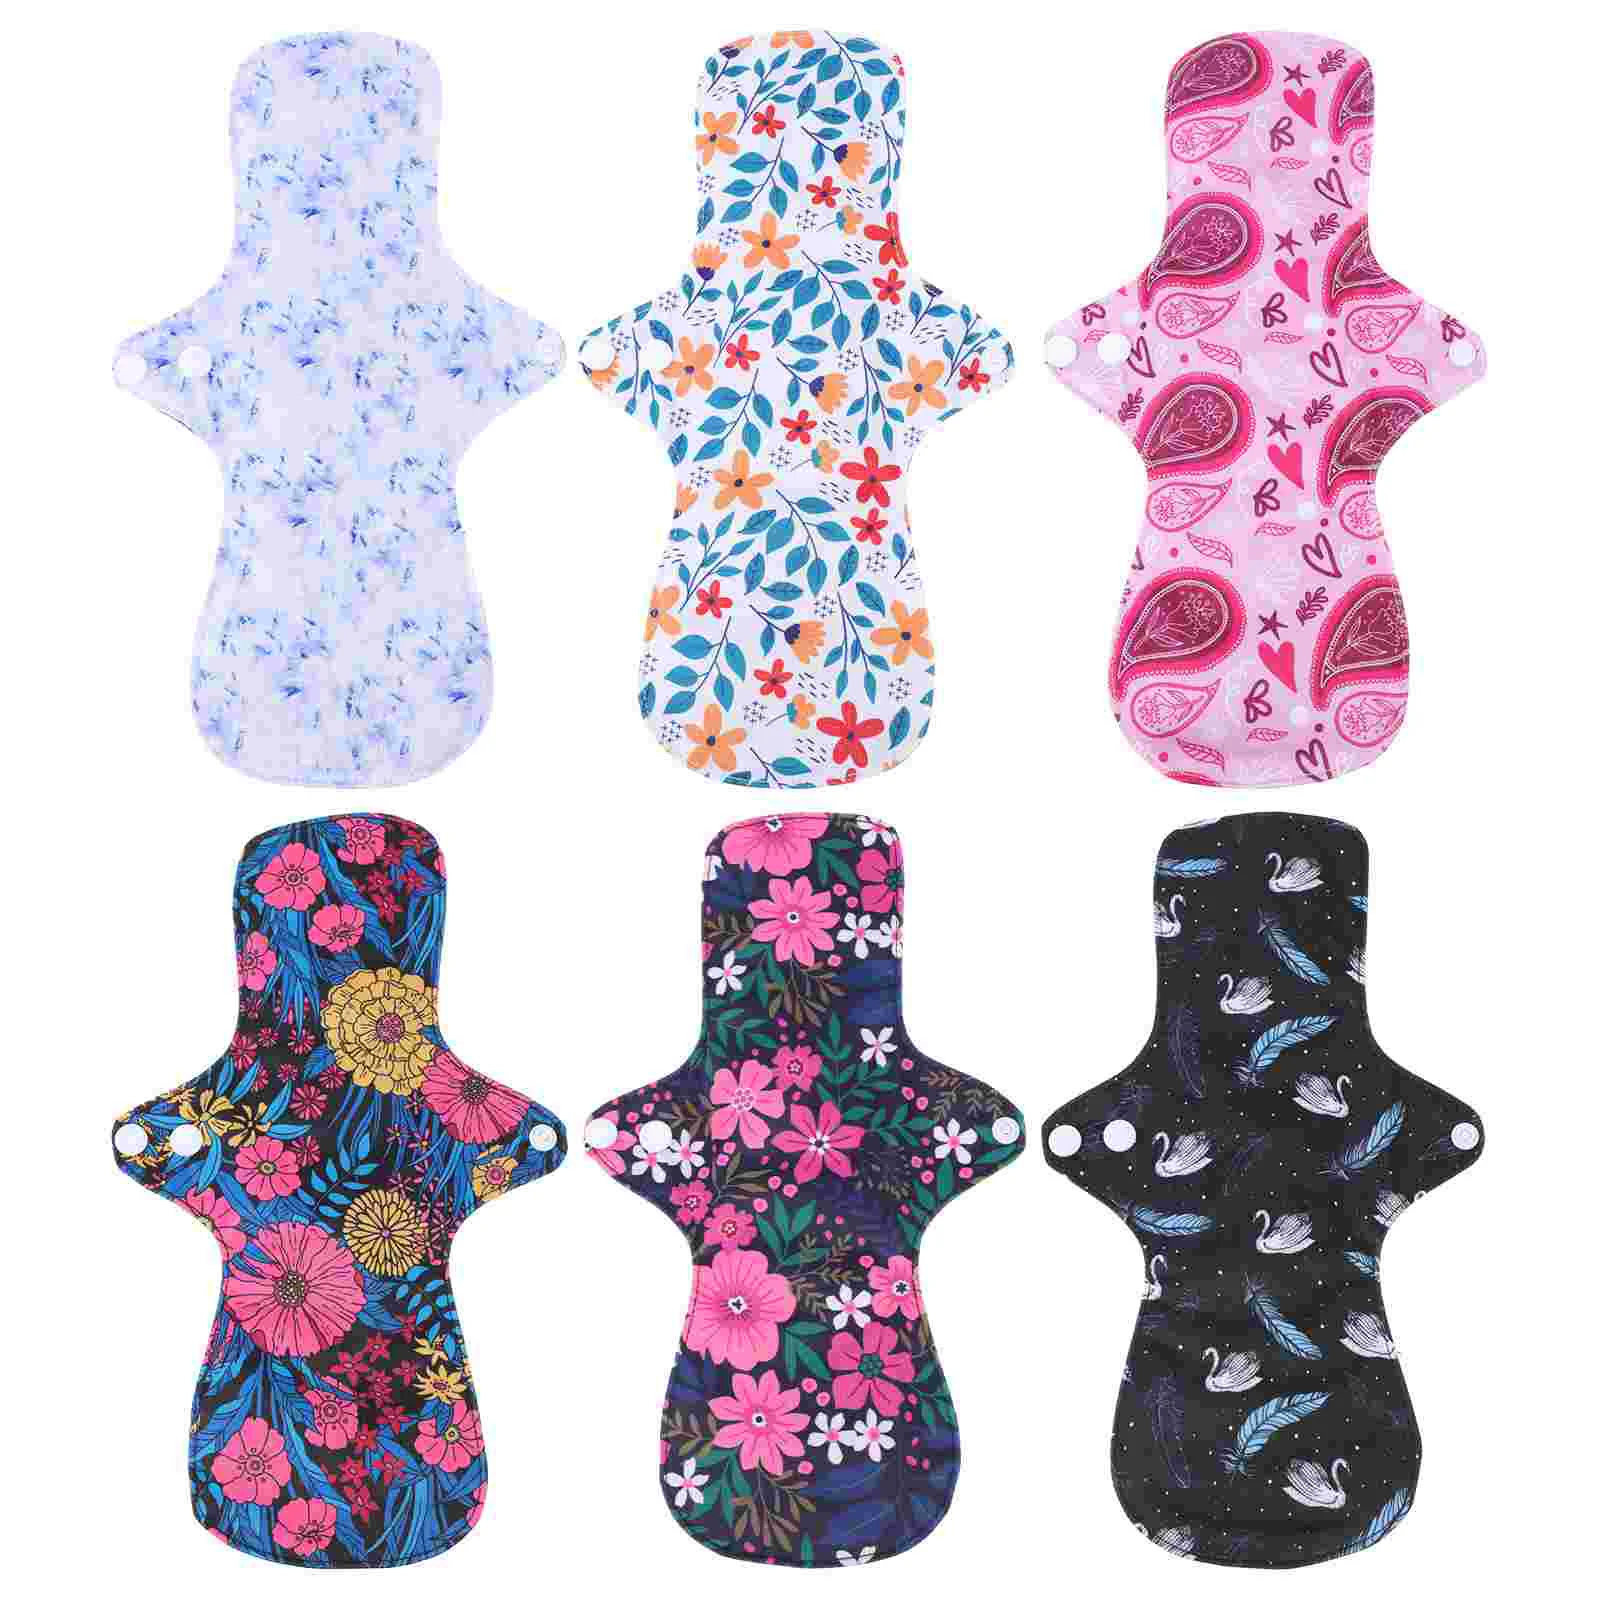 

6 Pcs Sanitary Napkin Women Menstrual Pads Ladies Cloth Organic Nursing Leakproof Napkins Adults Reusable for Girl